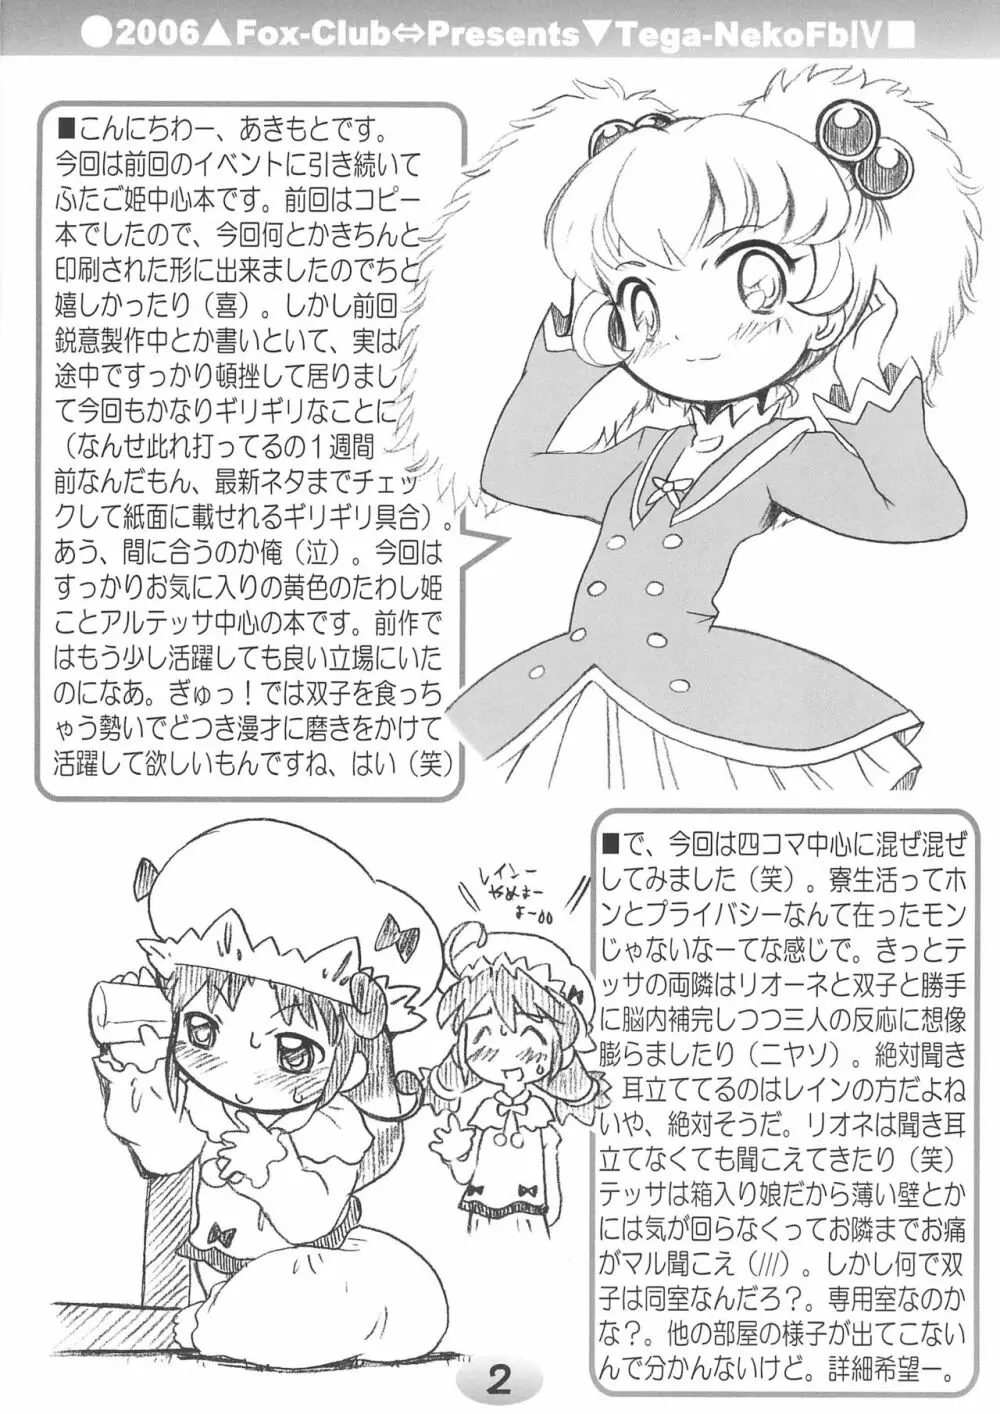 TeGa-NeKo Fb IV ふたご姫 2ぷらす 2ページ